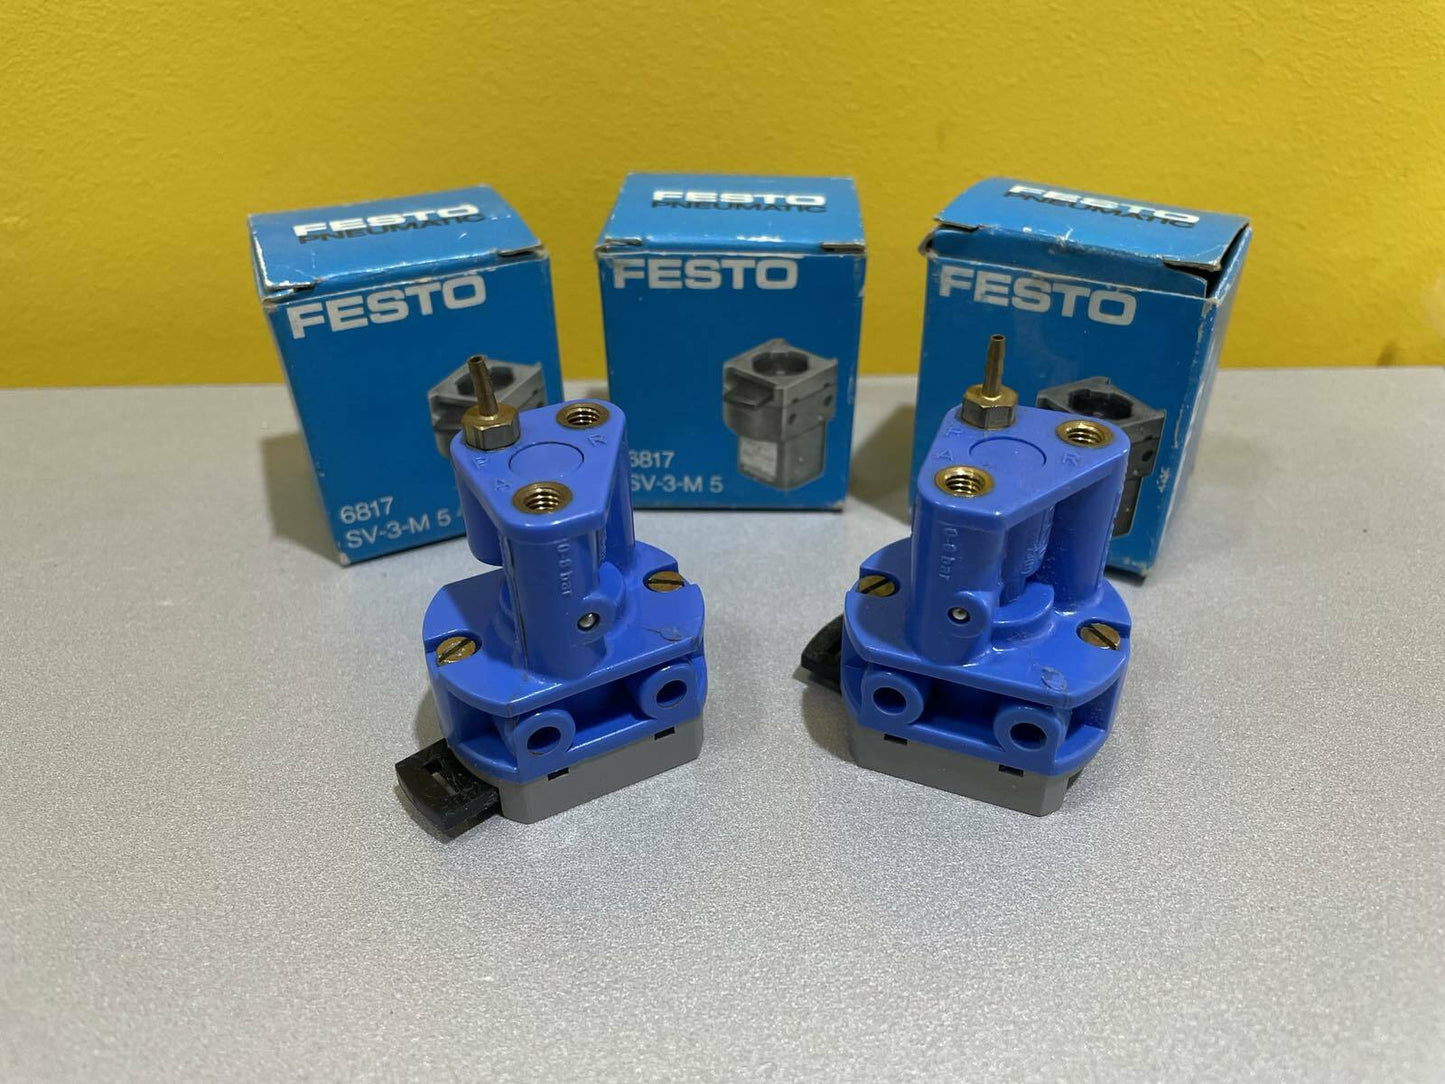 Festo Front panel valve SV-3-M5 ; 6817